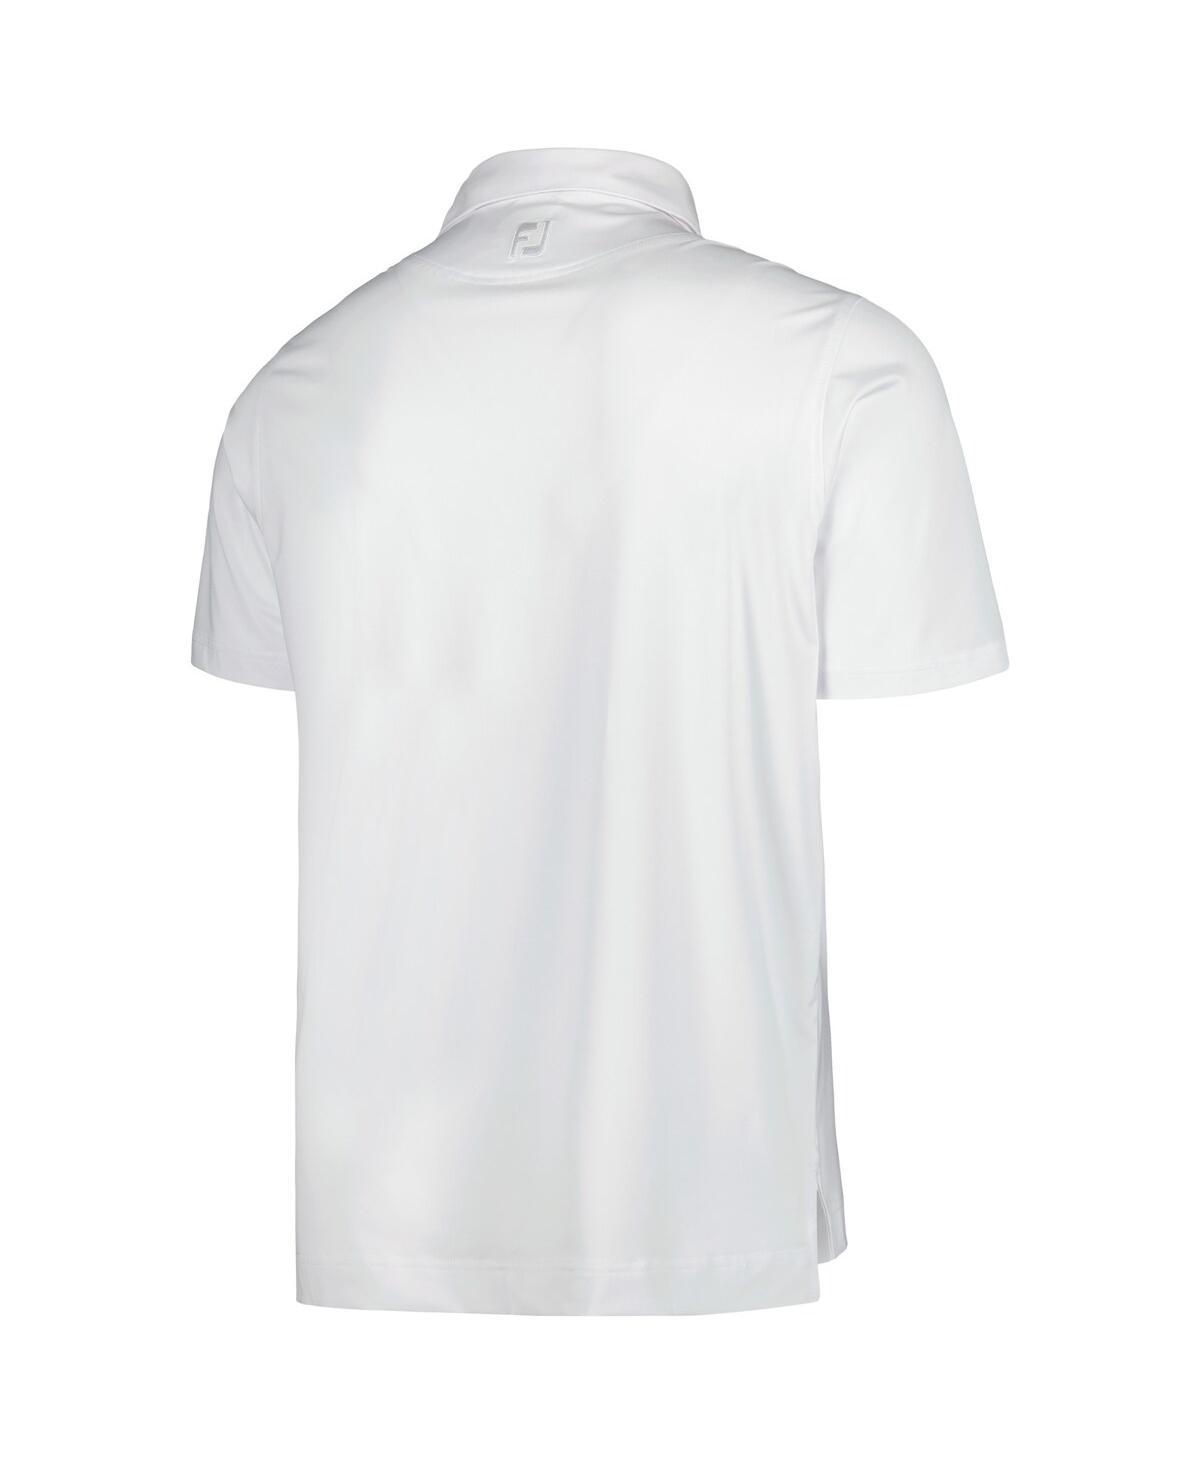 Shop Footjoy Men's  White Tour Championship Prodry Polo Shirt